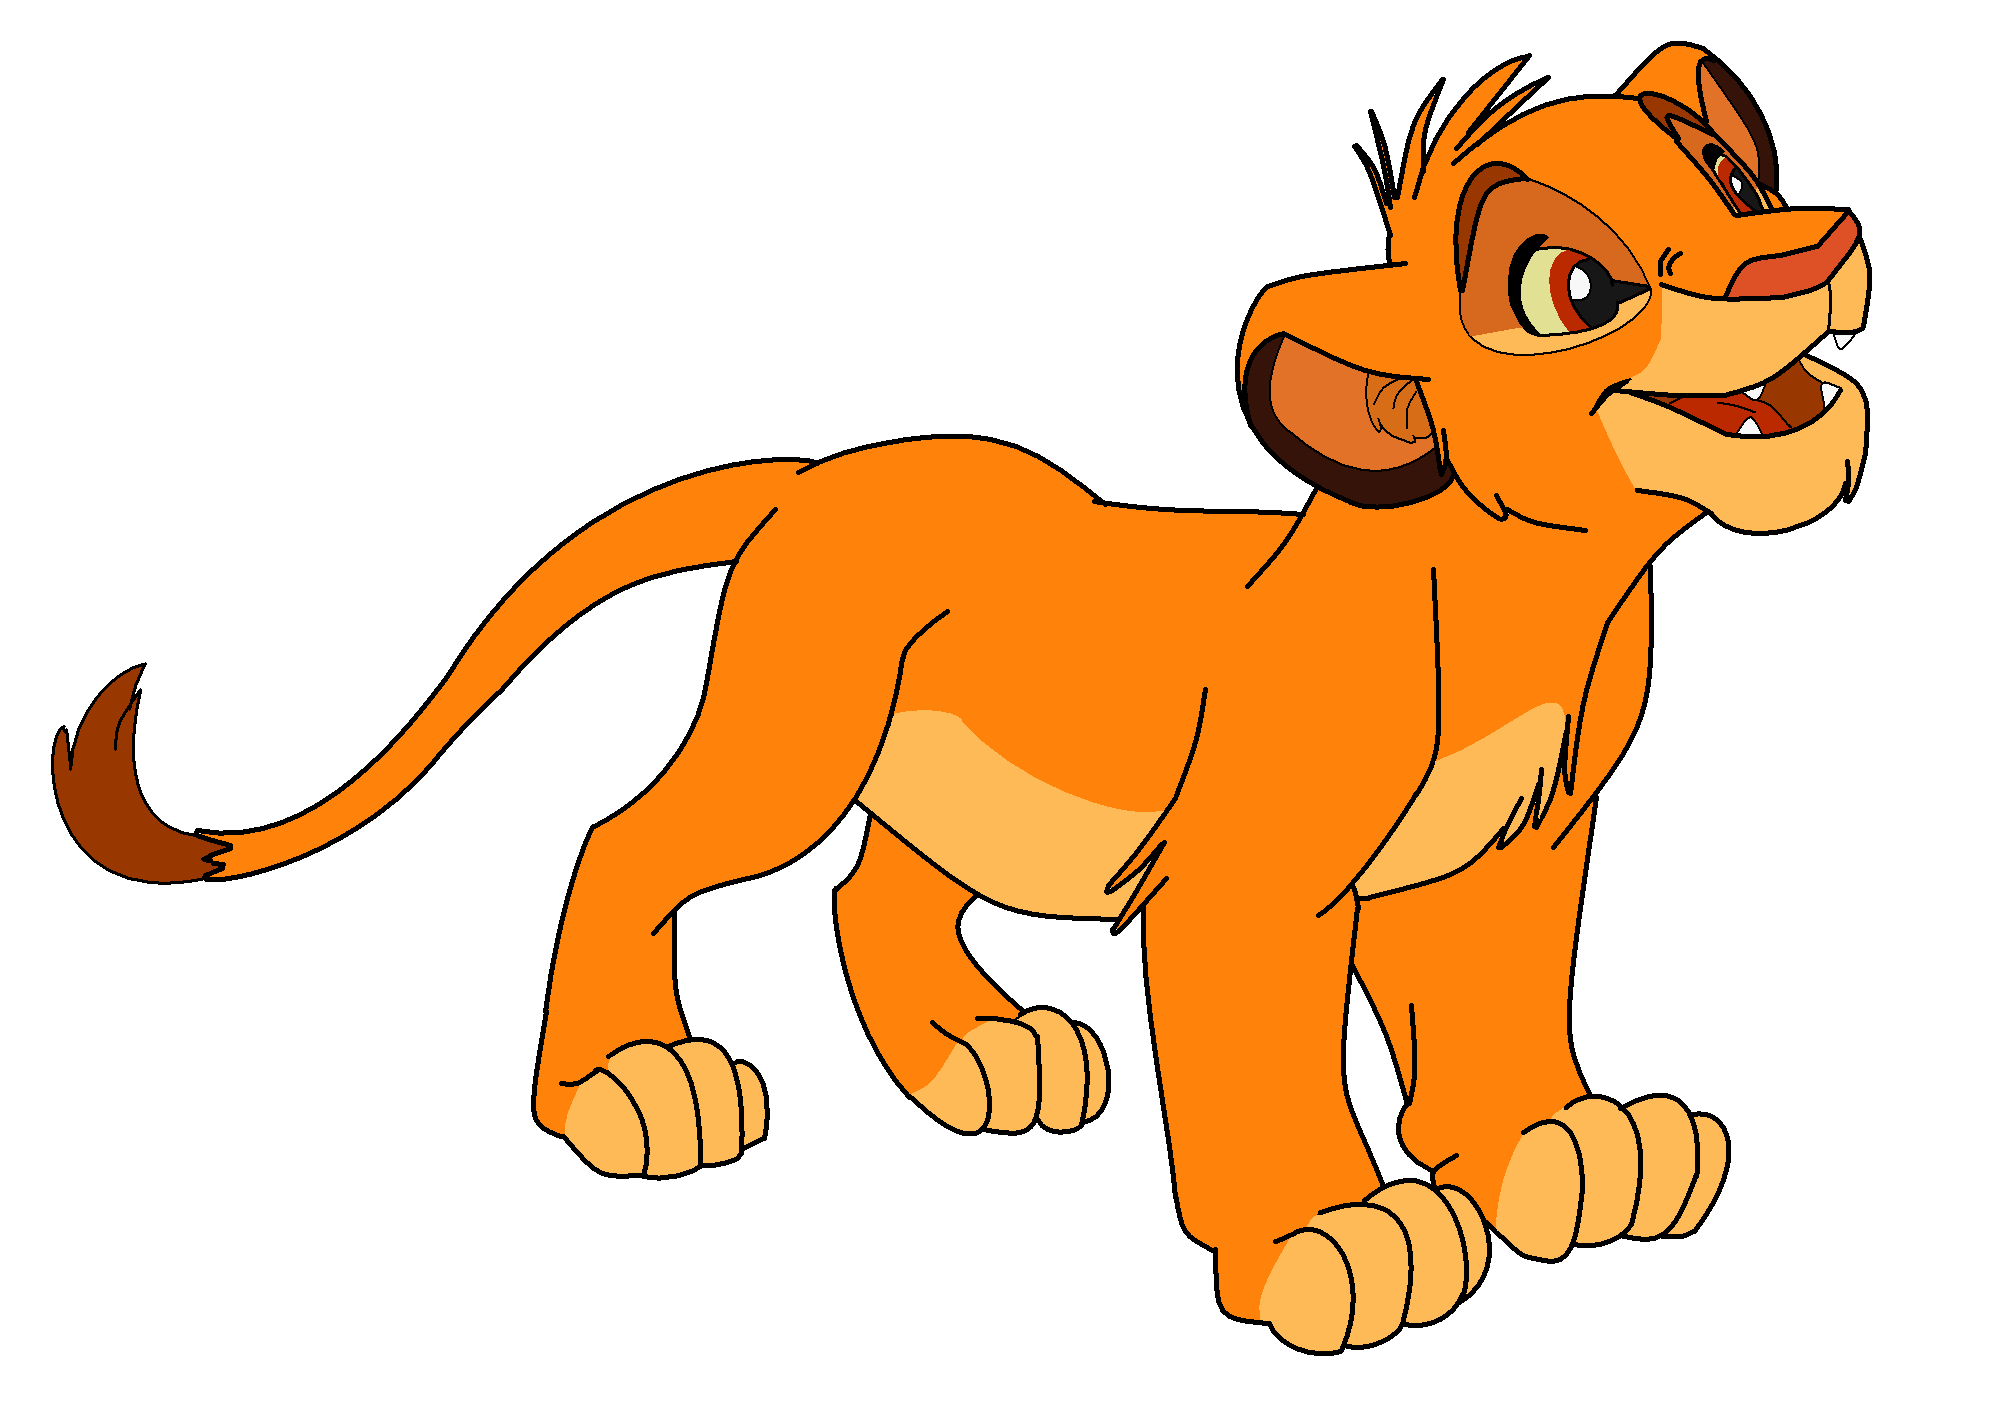 Prancing Lion Cub